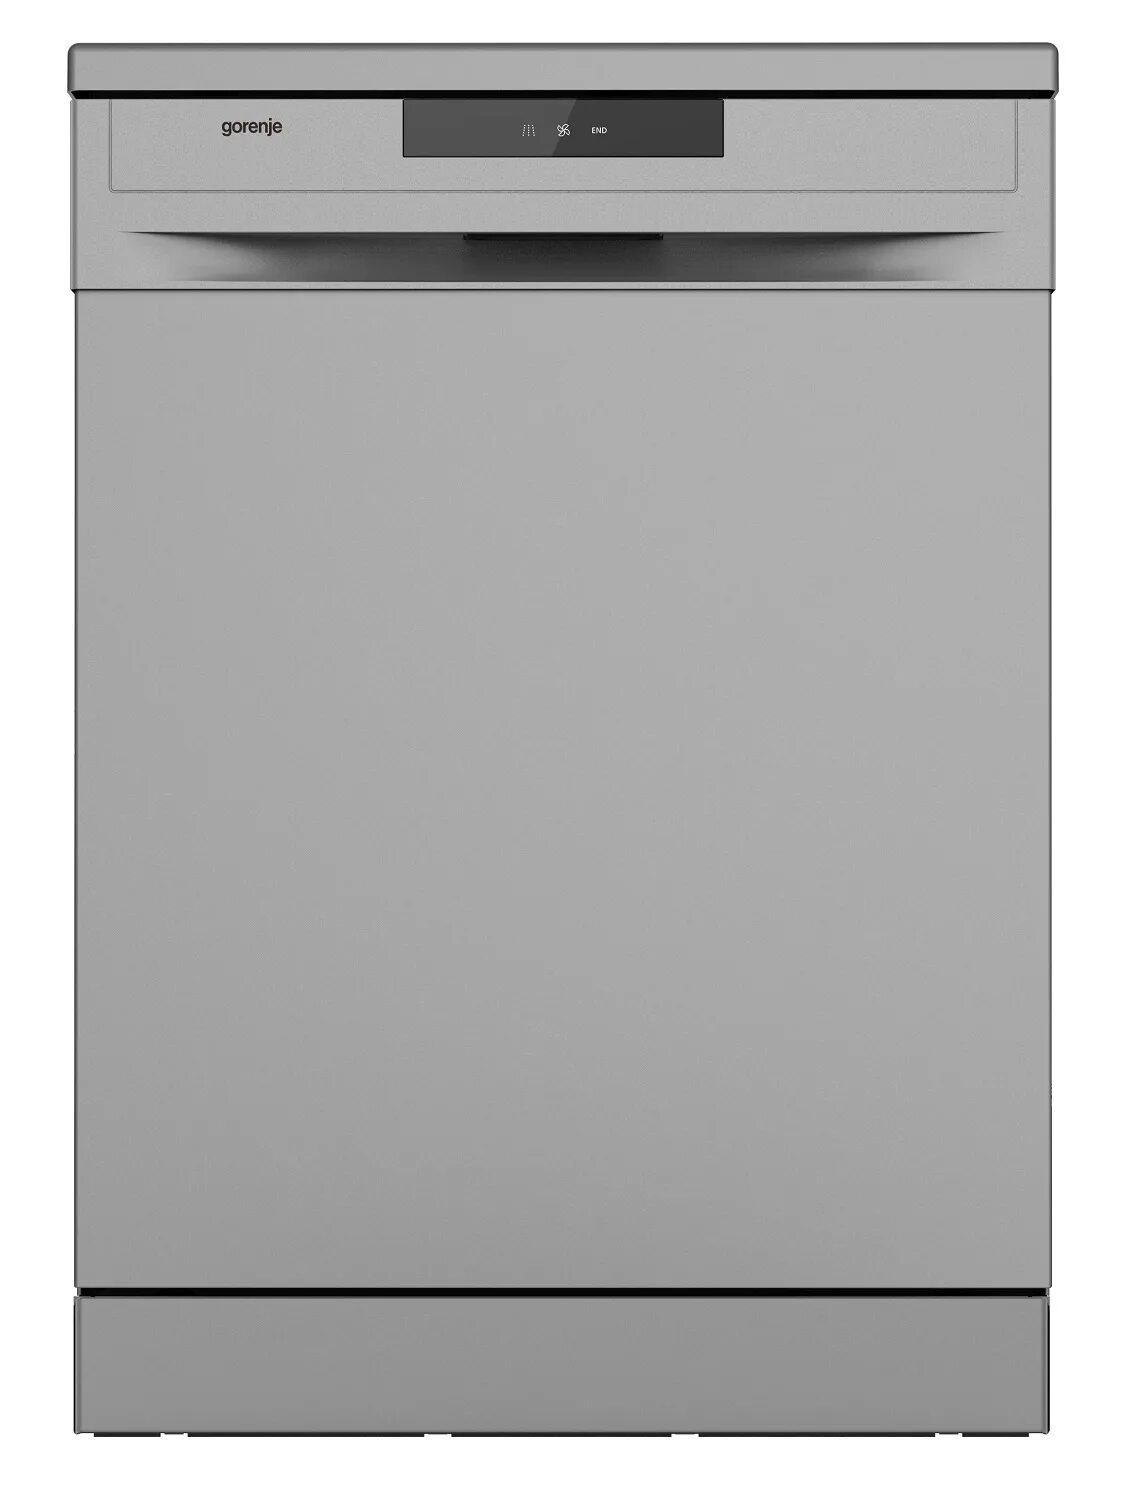 Посудомоечная машина Gorenje gs520e15s. Посудомоечная машина Gorenje gs52040s. Посудомоечная машина Gorenje gs52010s. Посудомойка Gorenje gs531e10w.